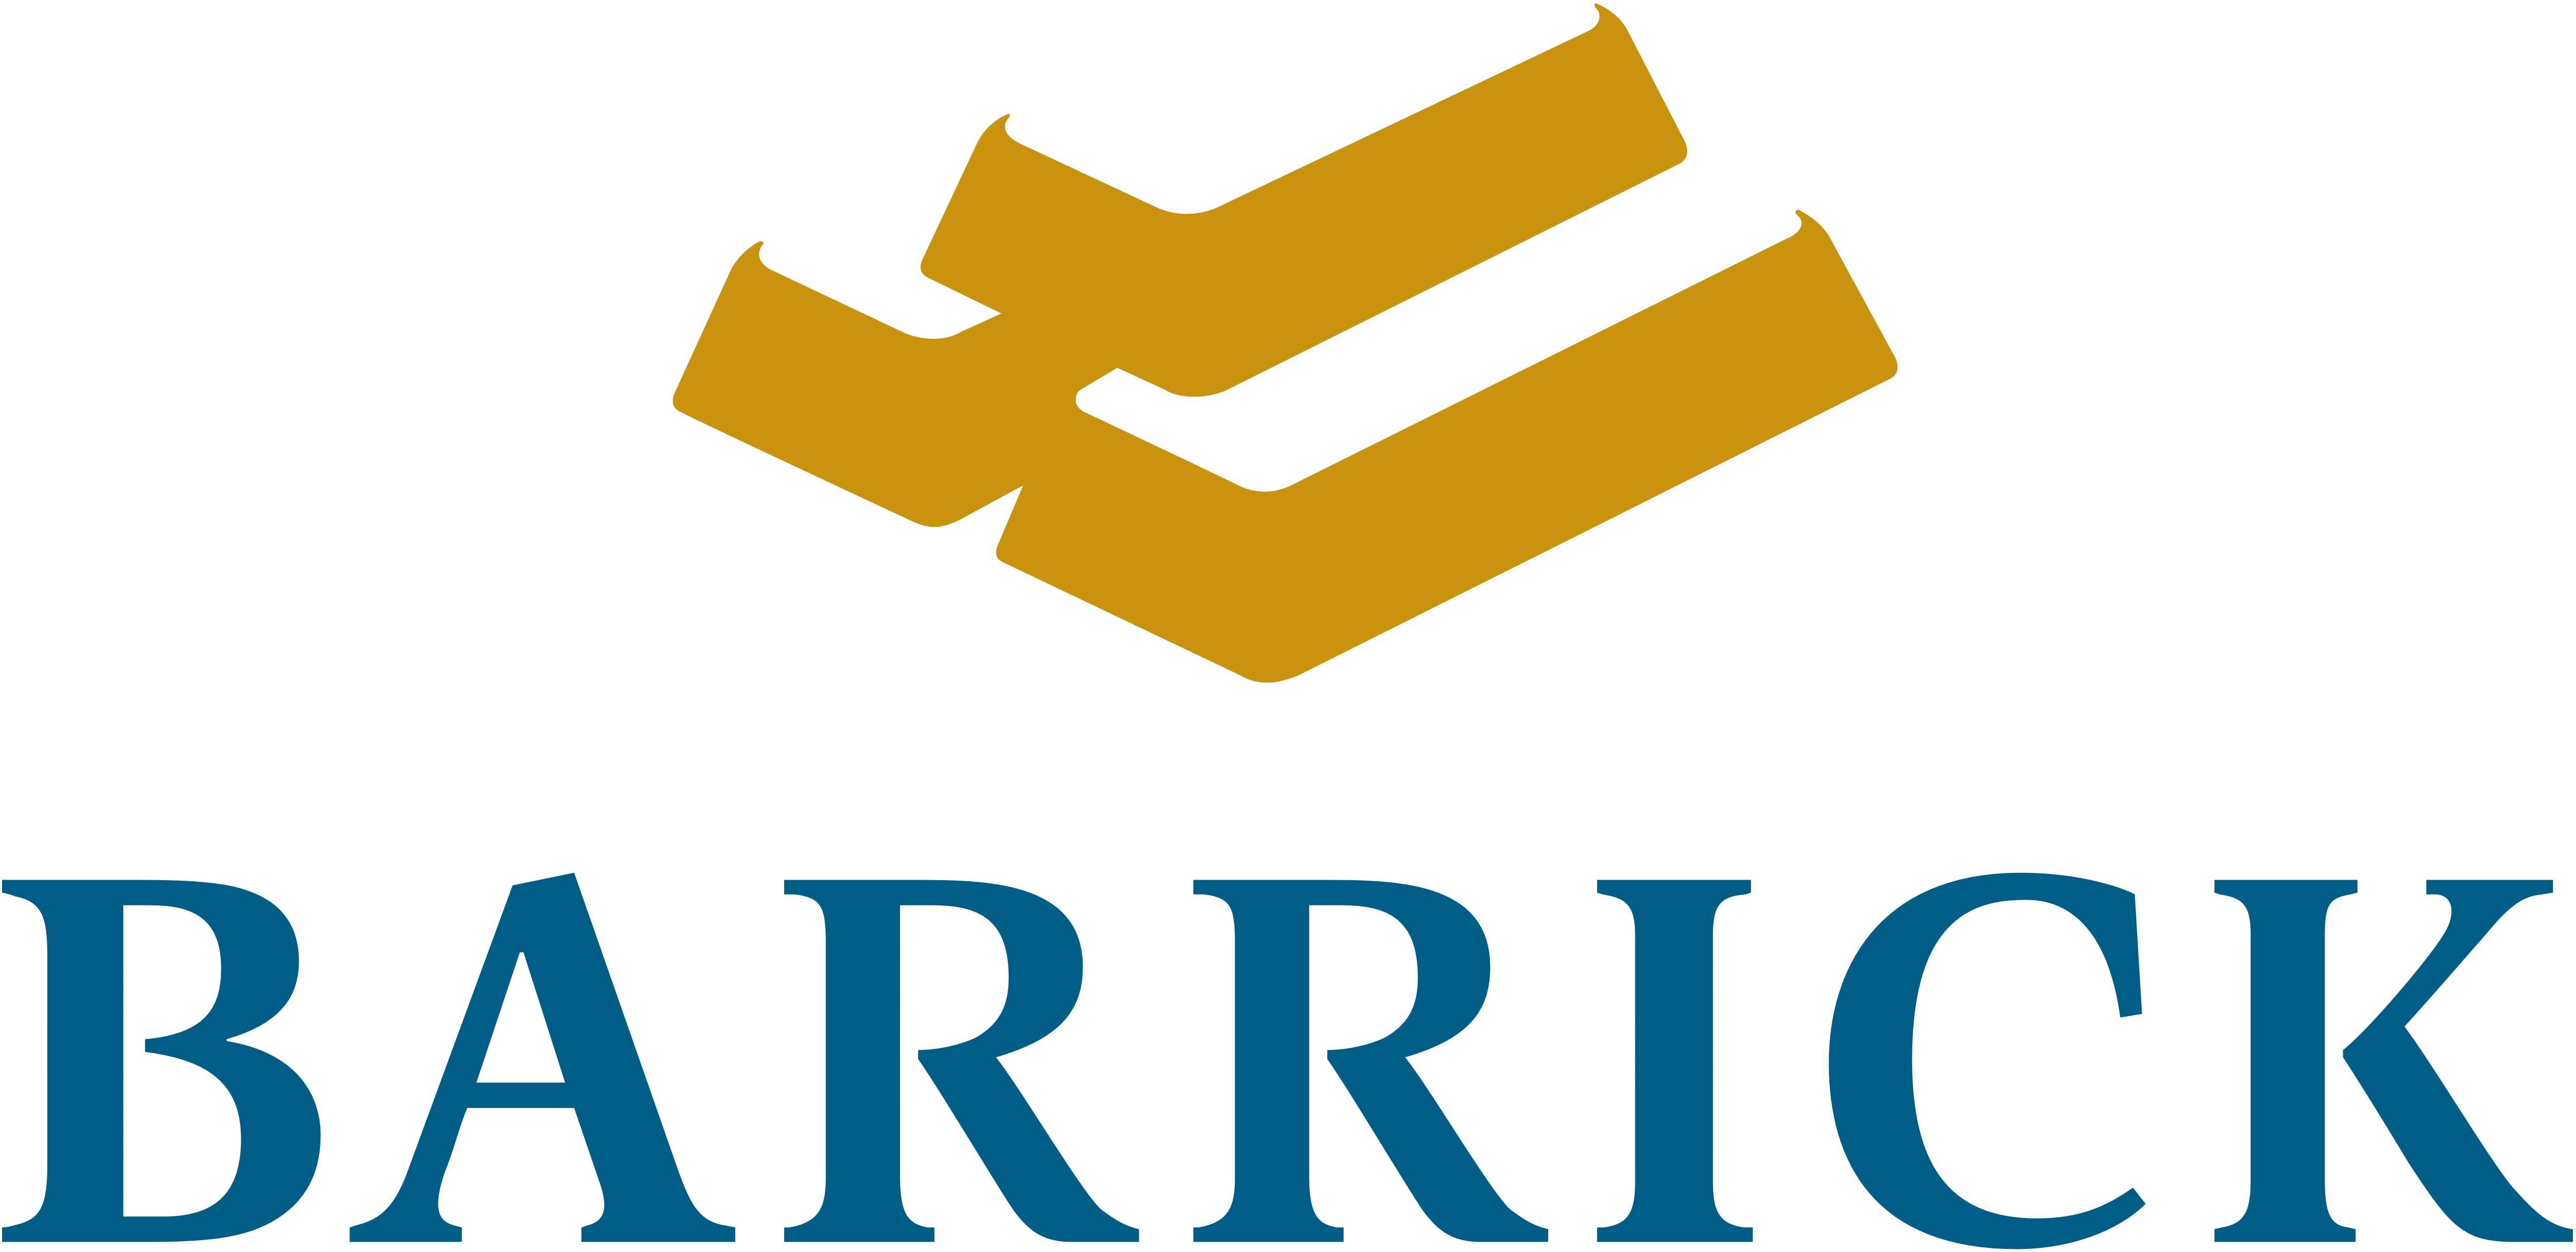 Barrick Gold – Logos Download